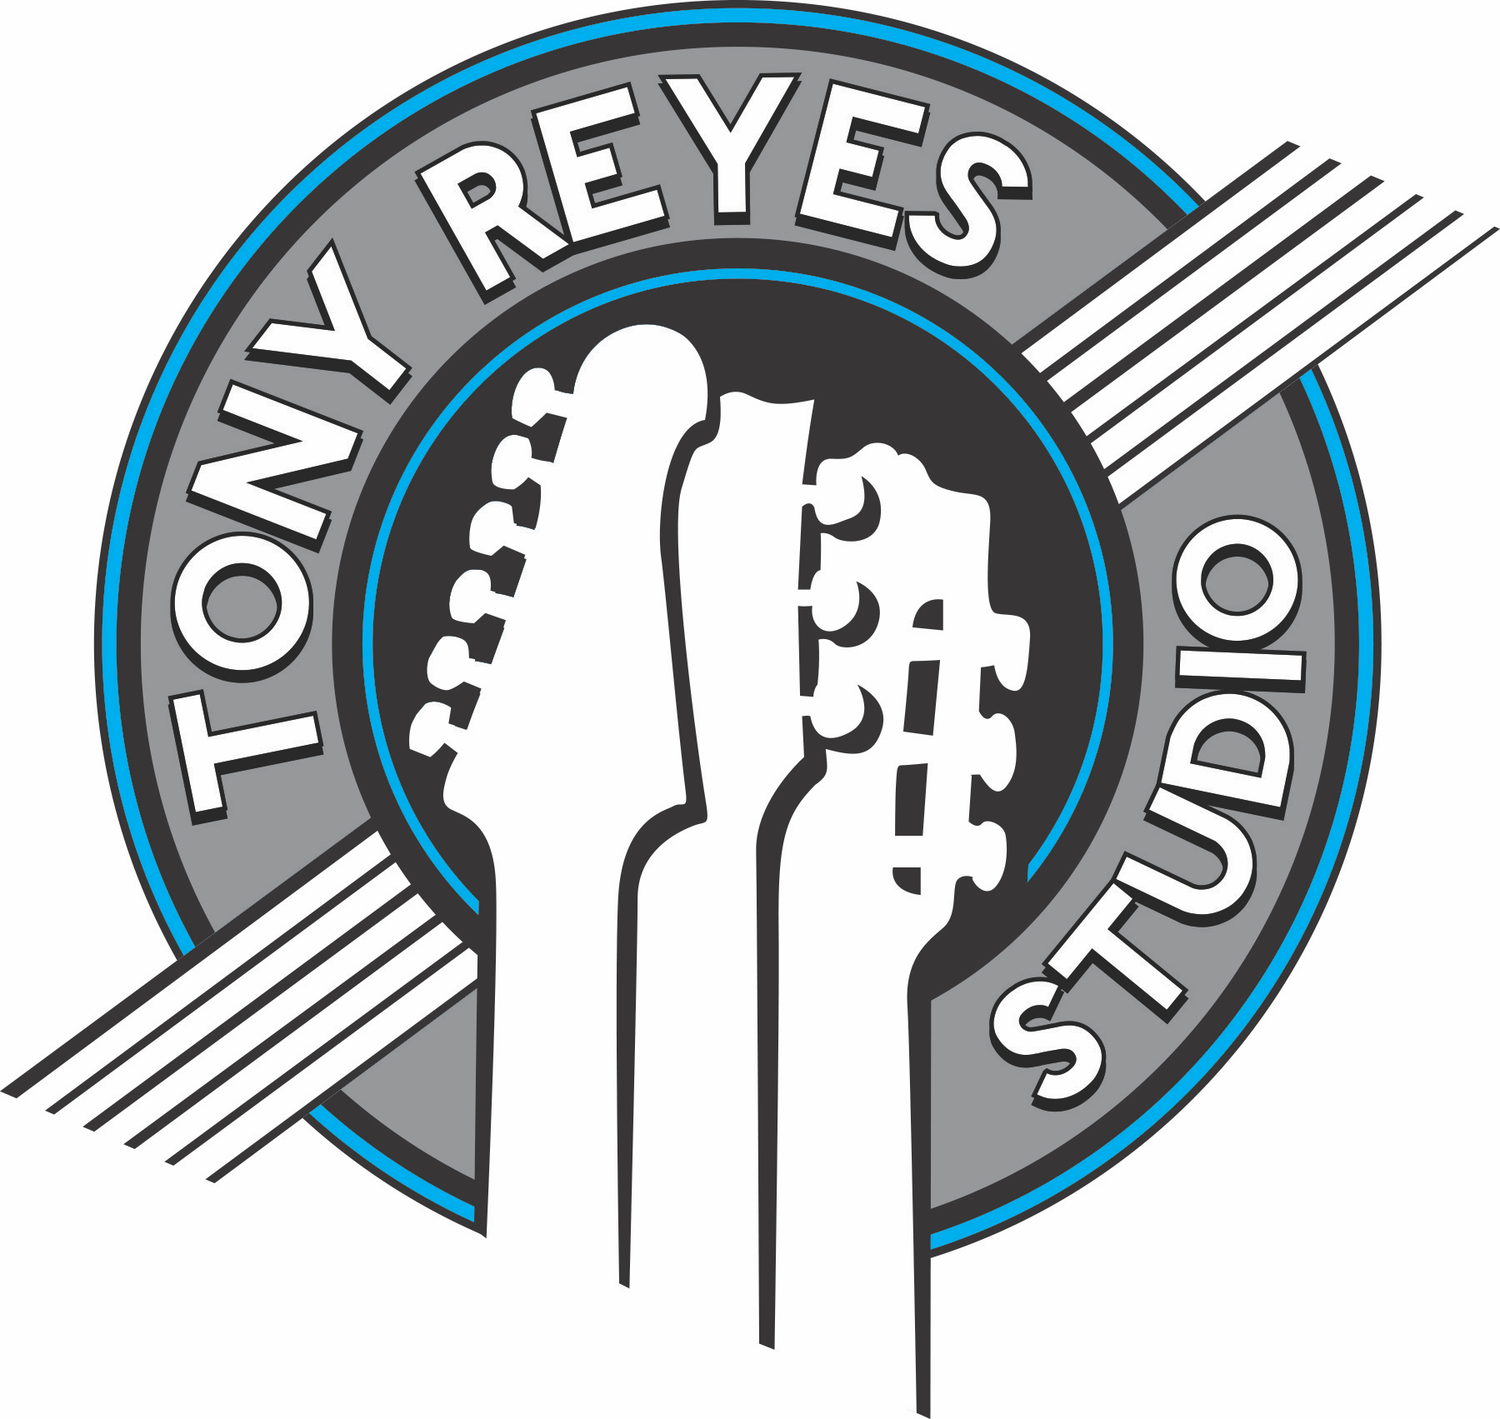 Tony Reyes Guitar Studio